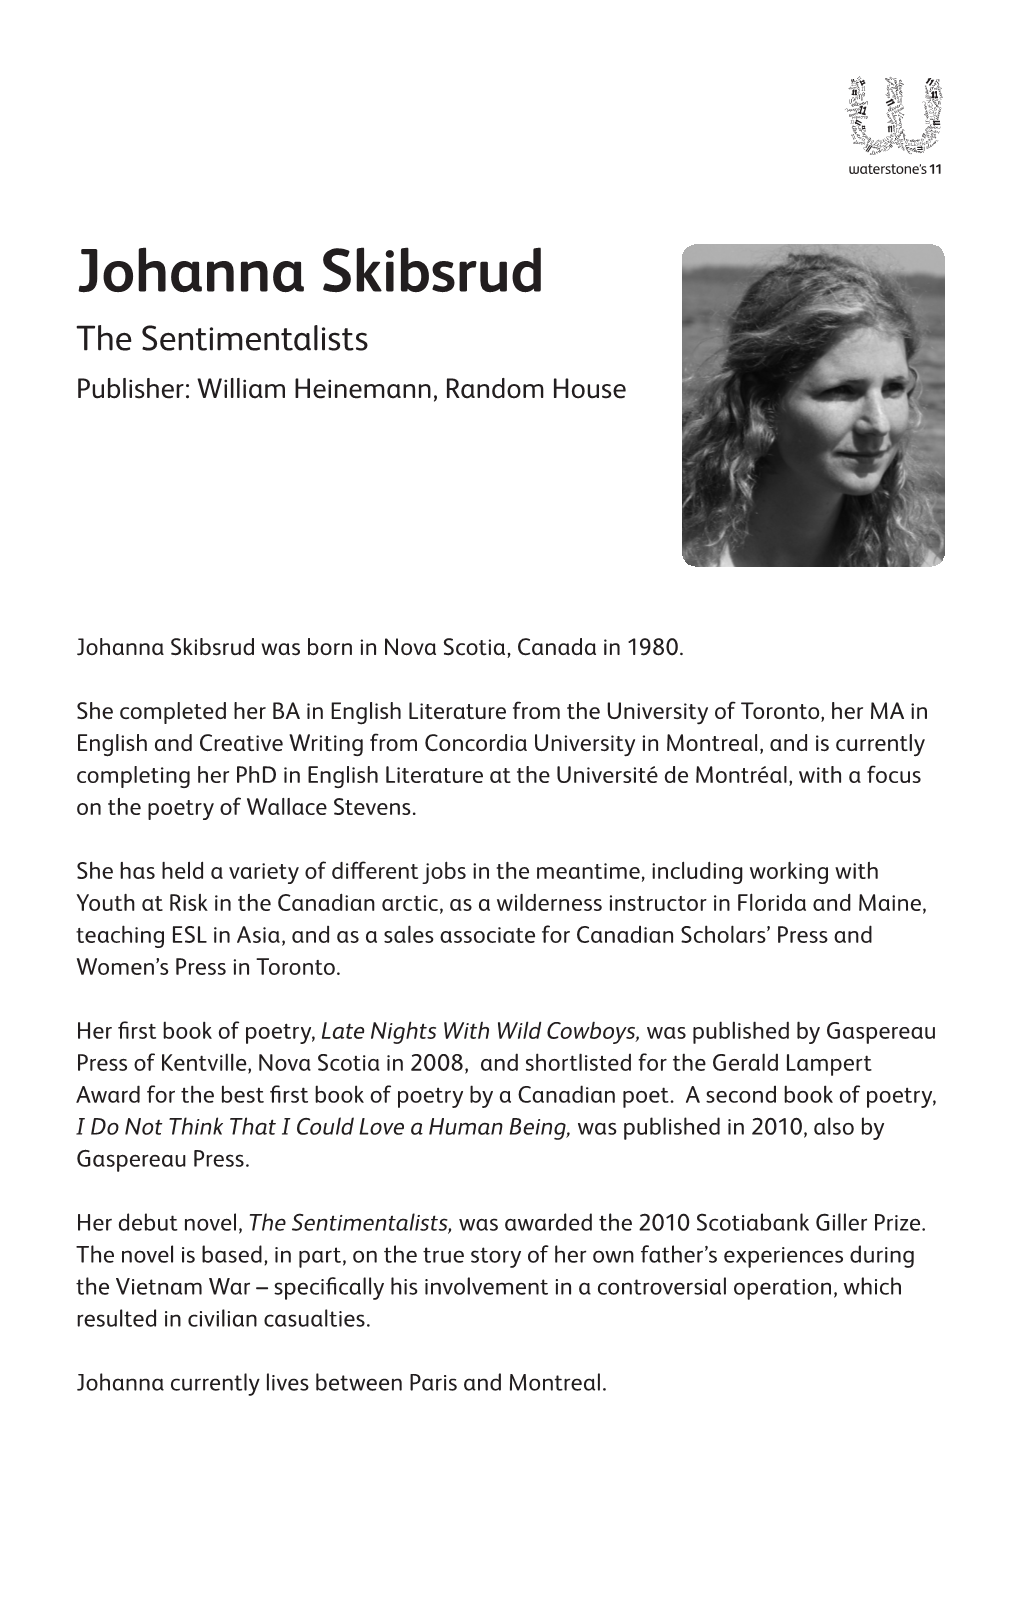 Johanna Skibsrud the Sentimentalists Publisher: William Heinemann, Random House